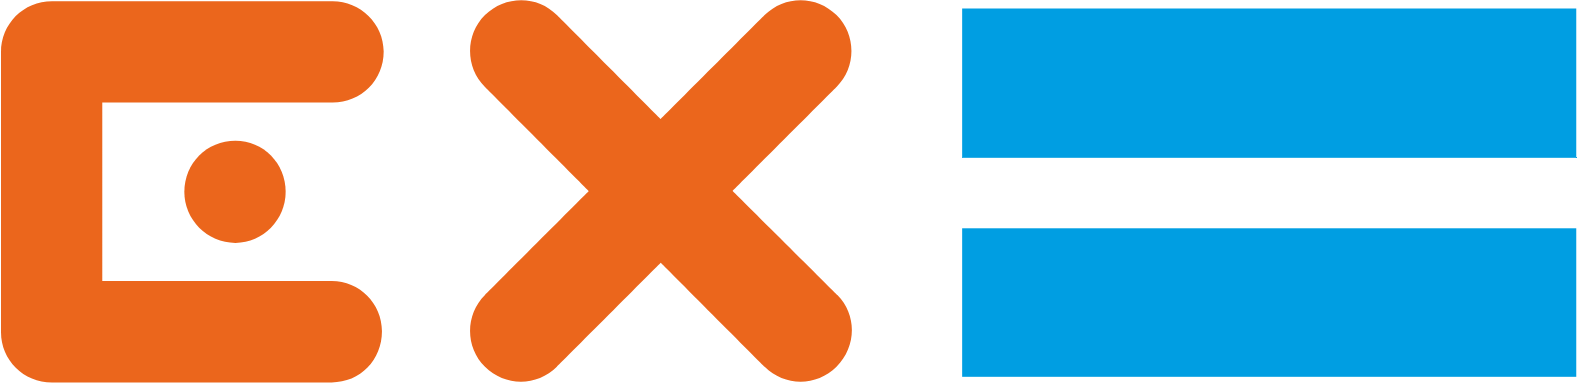 flatexDEGIRO AG logo (transparent PNG)